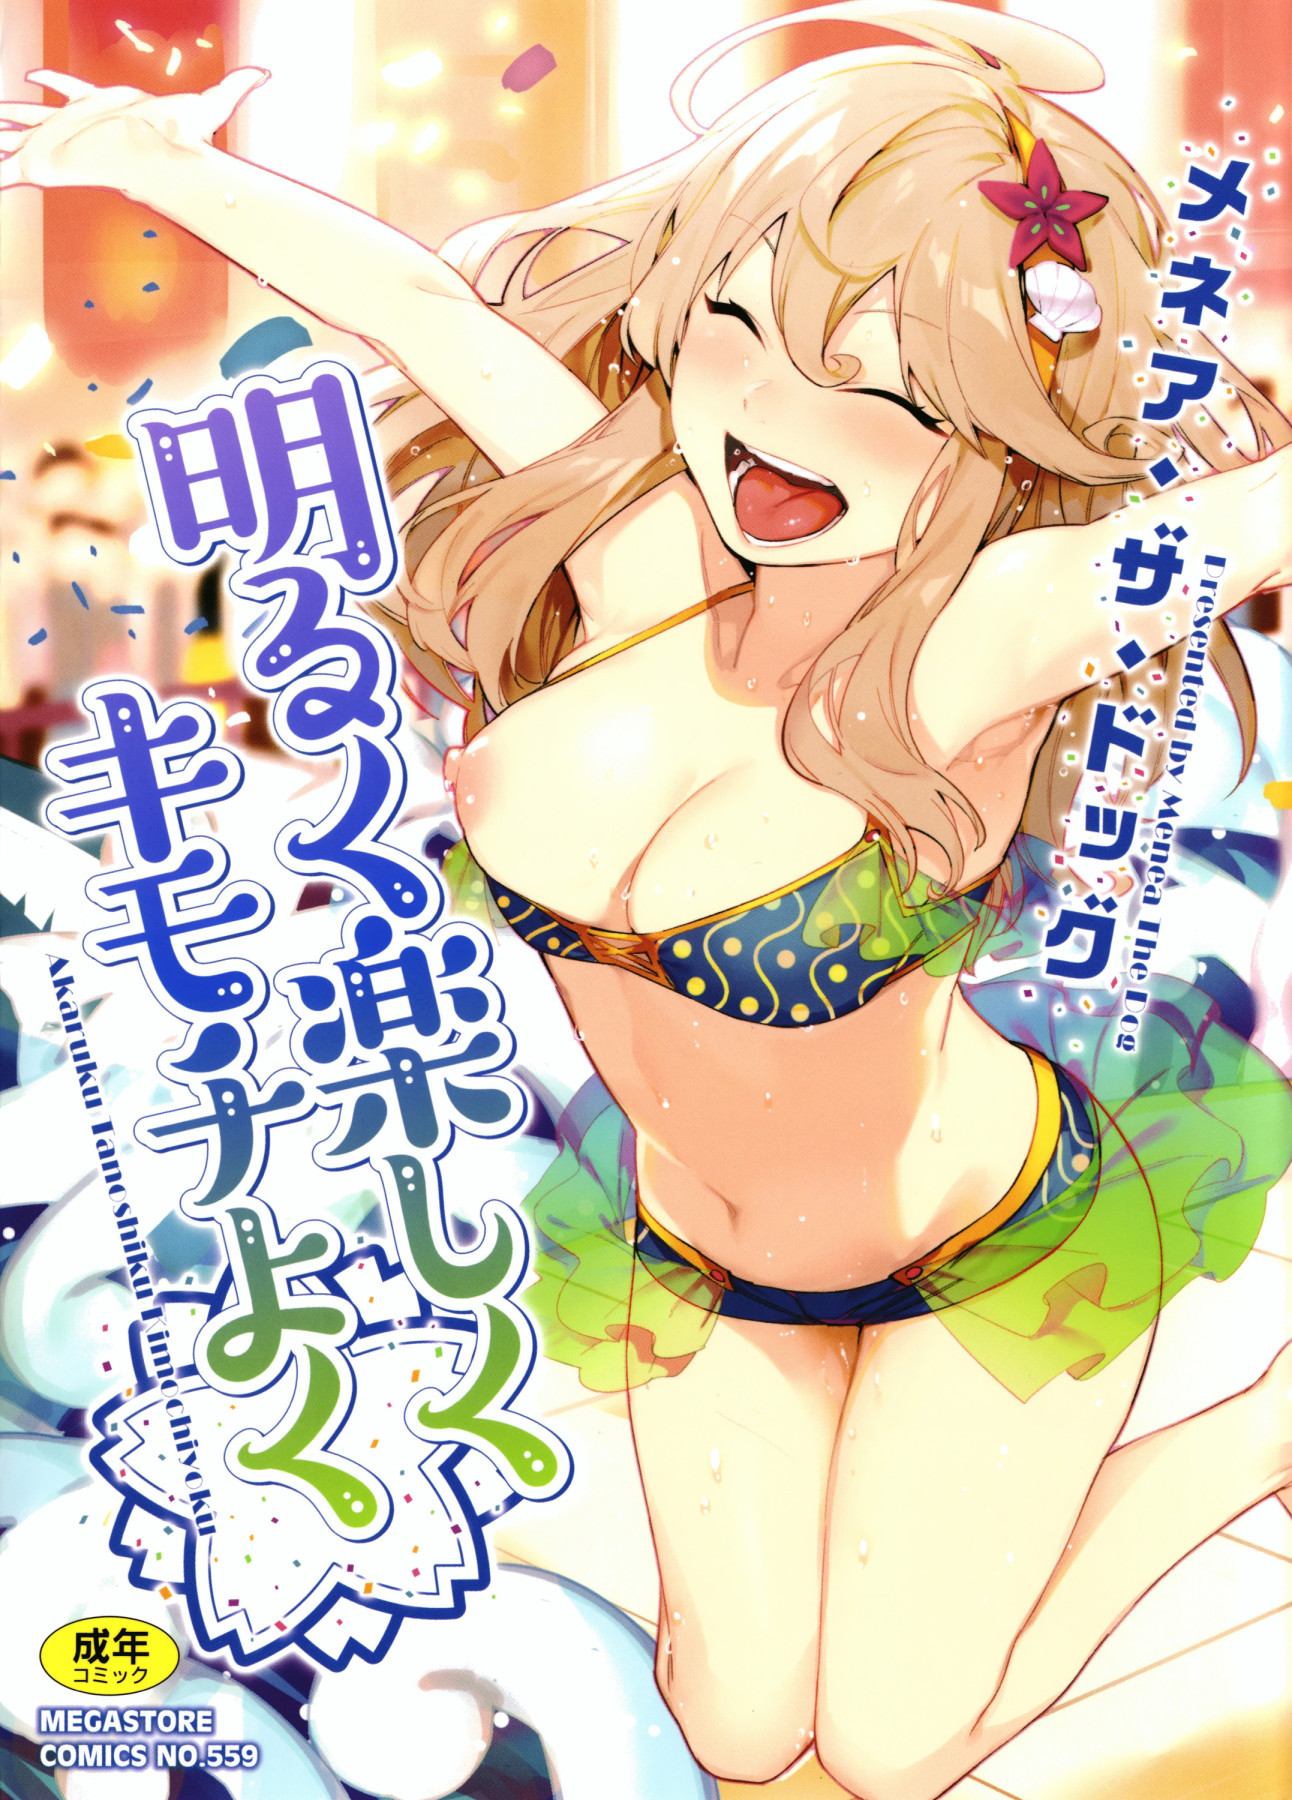 Hentai Manga Comic-Bright Fun And Pleasurable-Chapter 1-2-1